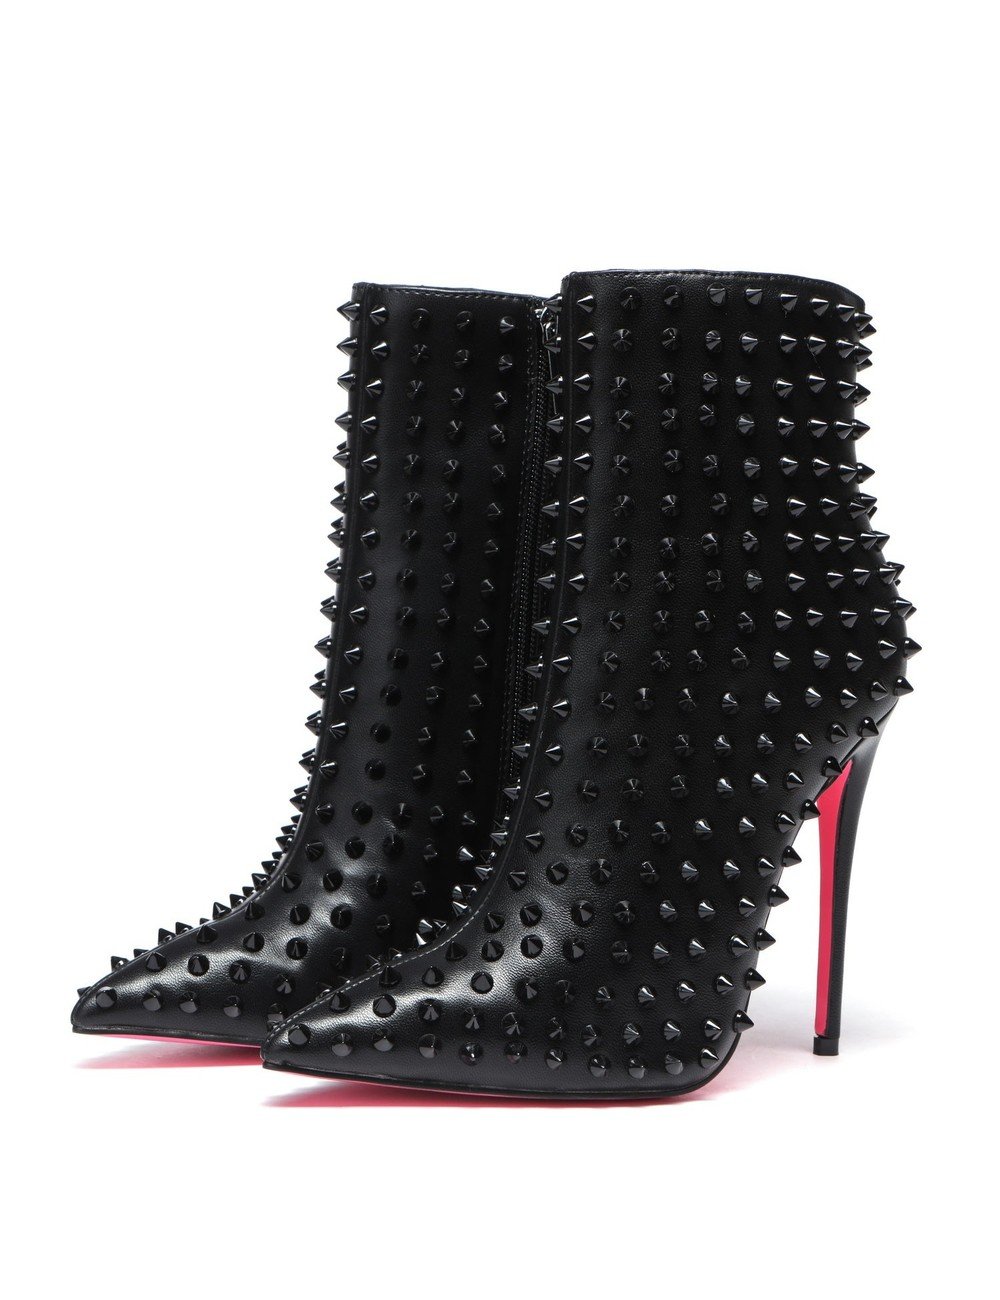 Giaro TYCLONE BLACK/BLACK ANKLE BOOTS - Shoebidoo Shoes | Giaro high heels